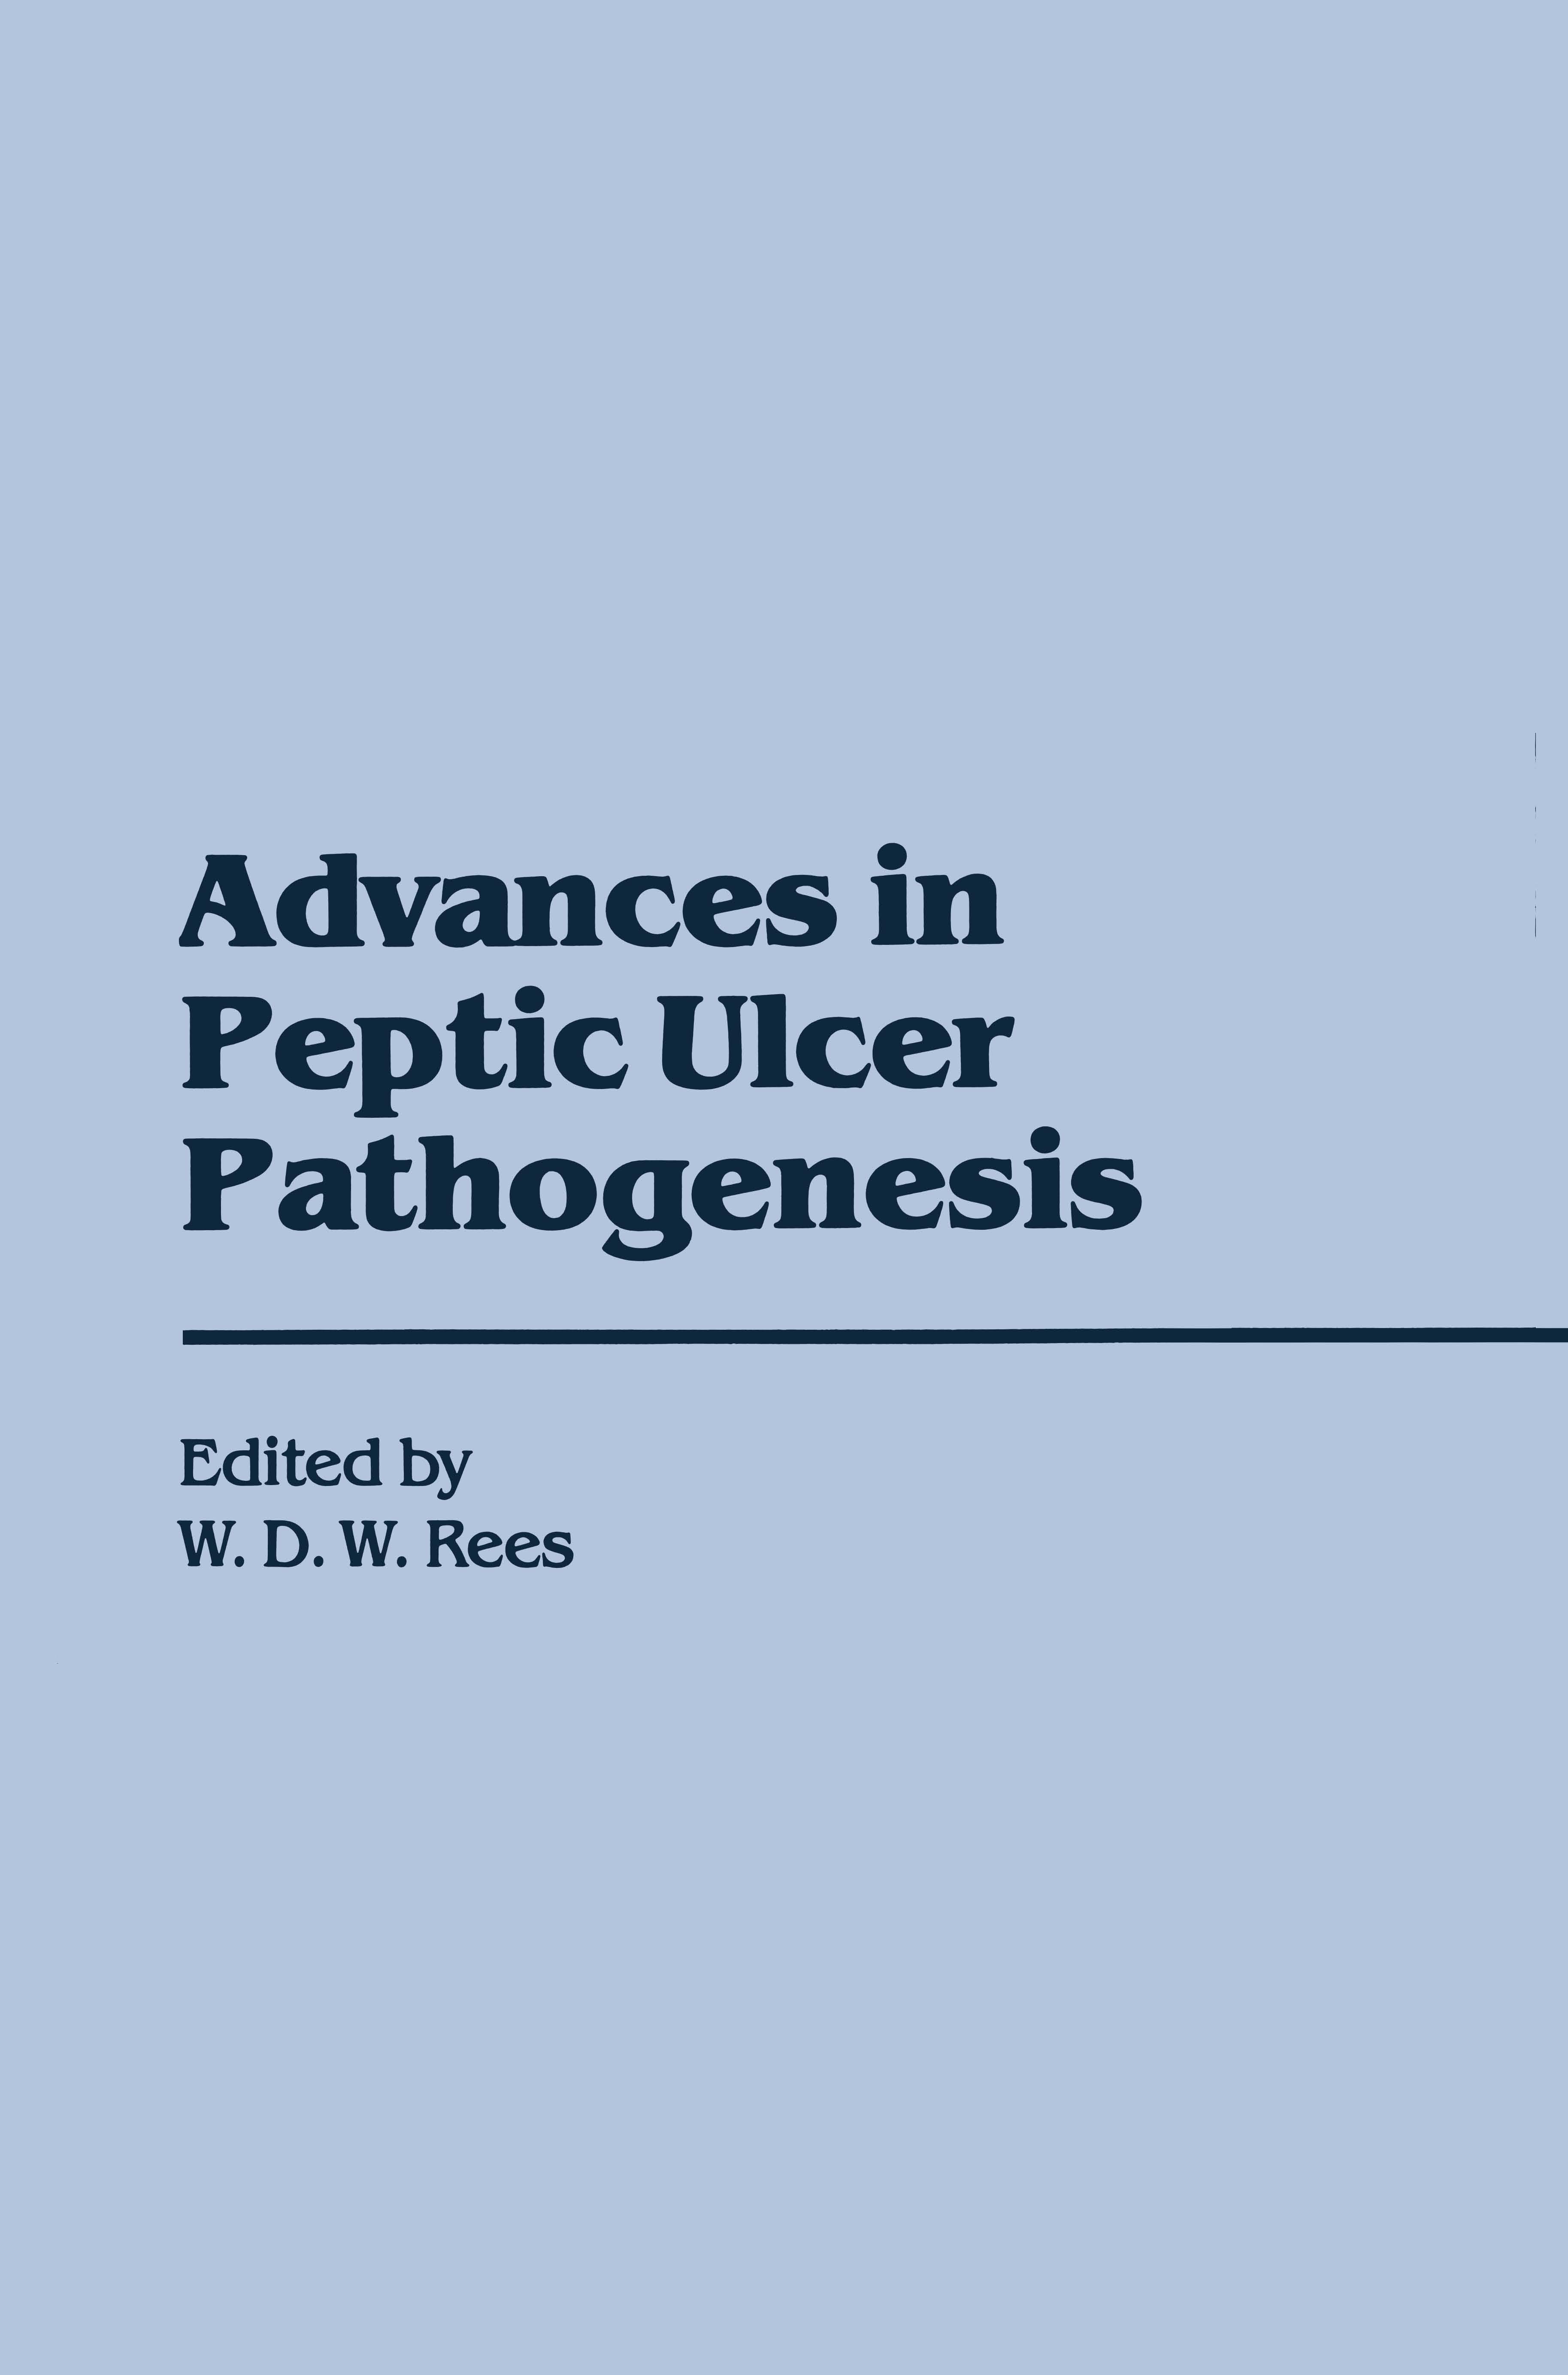 Advances in Peptic Ulcer Pathogenesis | SpringerLink